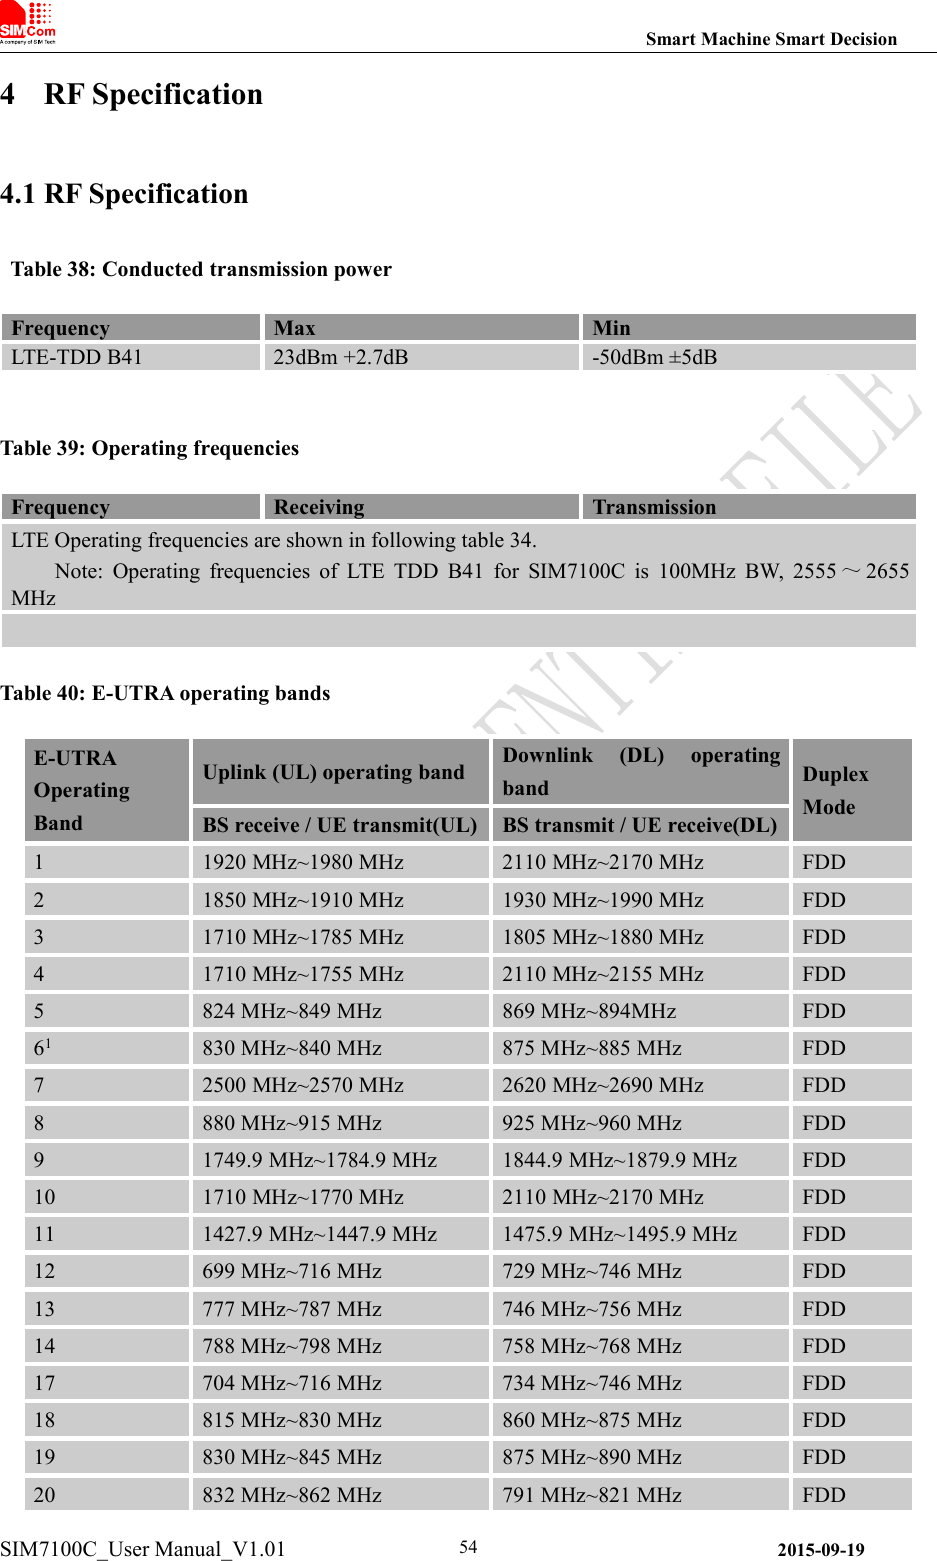 Smart Machine Smart DecisionSIM7100C_User Manual_V1.01 2015-09-19544 RF Specification4.1 RF SpecificationTable 38: Conducted transmission powerFrequencyMaxMinLTE-TDD B4123dBm +2.7dB-50dBm ±5dBTable 39: Operating frequenciesFrequencyReceivingTransmissionLTE Operating frequencies are shown in following table 34.Note: Operating frequencies of LTE TDD B41 for SIM7100C is 100MHz BW, 2555 ～2655MHzTable 40: E-UTRA operating bandsE-UTRAOperatingBandUplink (UL) operating bandDownlink (DL) operatingbandDuplexModeBS receive / UE transmit(UL)BS transmit / UE receive(DL)11920 MHz~1980 MHz2110 MHz~2170 MHzFDD21850 MHz~1910 MHz1930 MHz~1990 MHzFDD31710 MHz~1785 MHz1805 MHz~1880 MHzFDD41710 MHz~1755 MHz2110 MHz~2155 MHzFDD5824 MHz~849 MHz869 MHz~894MHzFDD61830 MHz~840 MHz875 MHz~885 MHzFDD72500 MHz~2570 MHz2620 MHz~2690 MHzFDD8880 MHz~915 MHz925 MHz~960 MHzFDD91749.9 MHz~1784.9 MHz1844.9 MHz~1879.9 MHzFDD101710 MHz~1770 MHz2110 MHz~2170 MHzFDD111427.9 MHz~1447.9 MHz1475.9 MHz~1495.9 MHzFDD12699 MHz~716 MHz729 MHz~746 MHzFDD13777 MHz~787 MHz746 MHz~756 MHzFDD14788 MHz~798 MHz758 MHz~768 MHzFDD17704 MHz~716 MHz734 MHz~746 MHzFDD18815 MHz~830 MHz860 MHz~875 MHzFDD19830 MHz~845 MHz875 MHz~890 MHzFDD20832 MHz~862 MHz791 MHz~821 MHzFDD